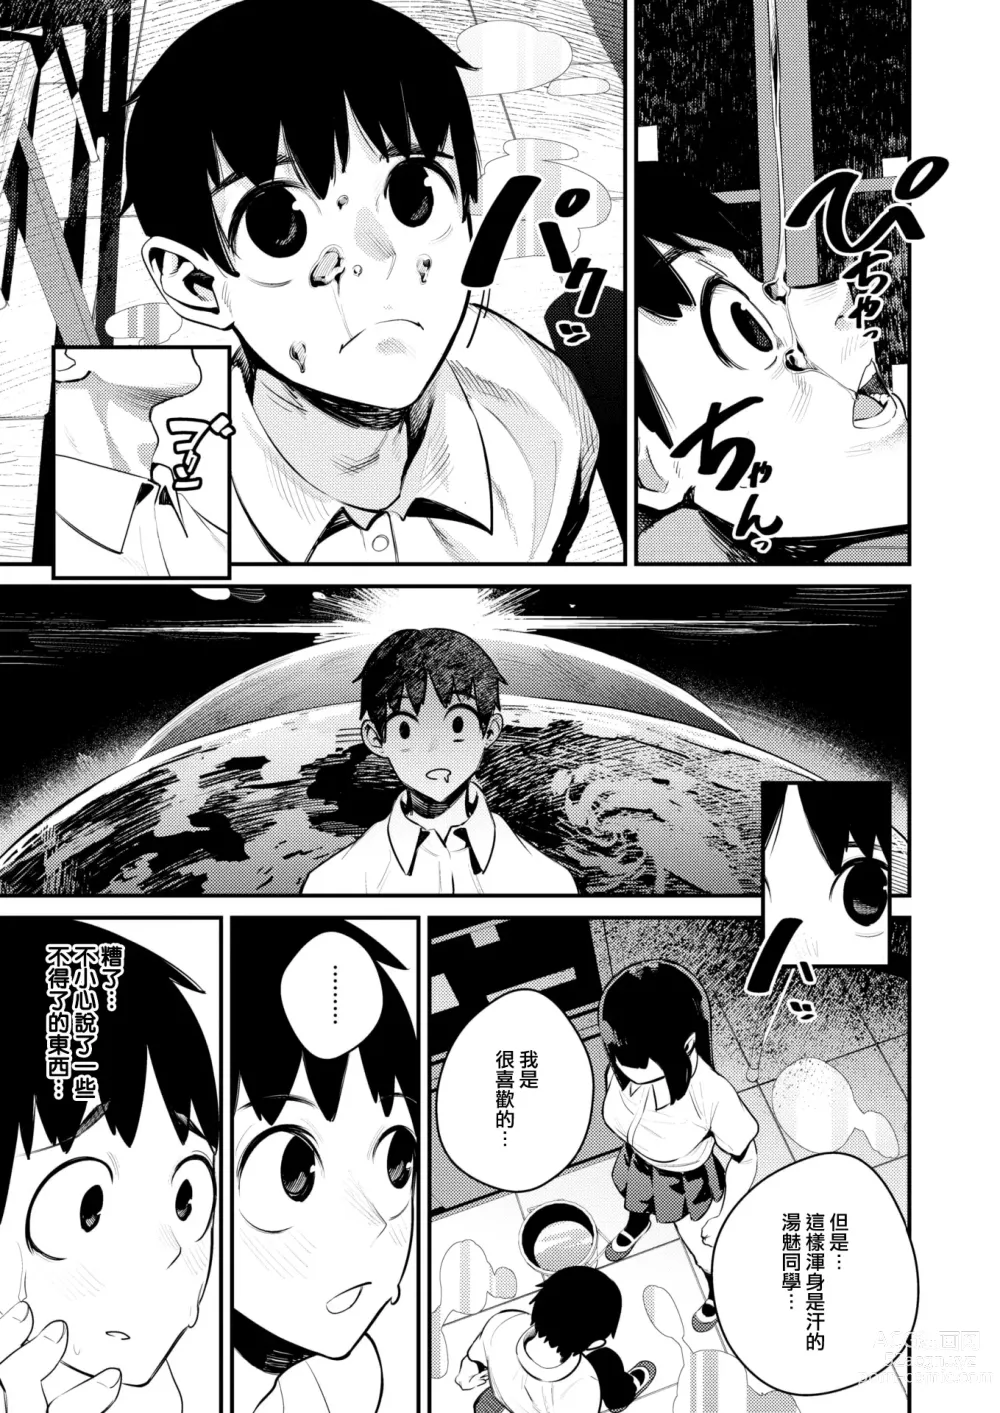 Page 6 of manga Kaijin Netsuai Mokushiroku